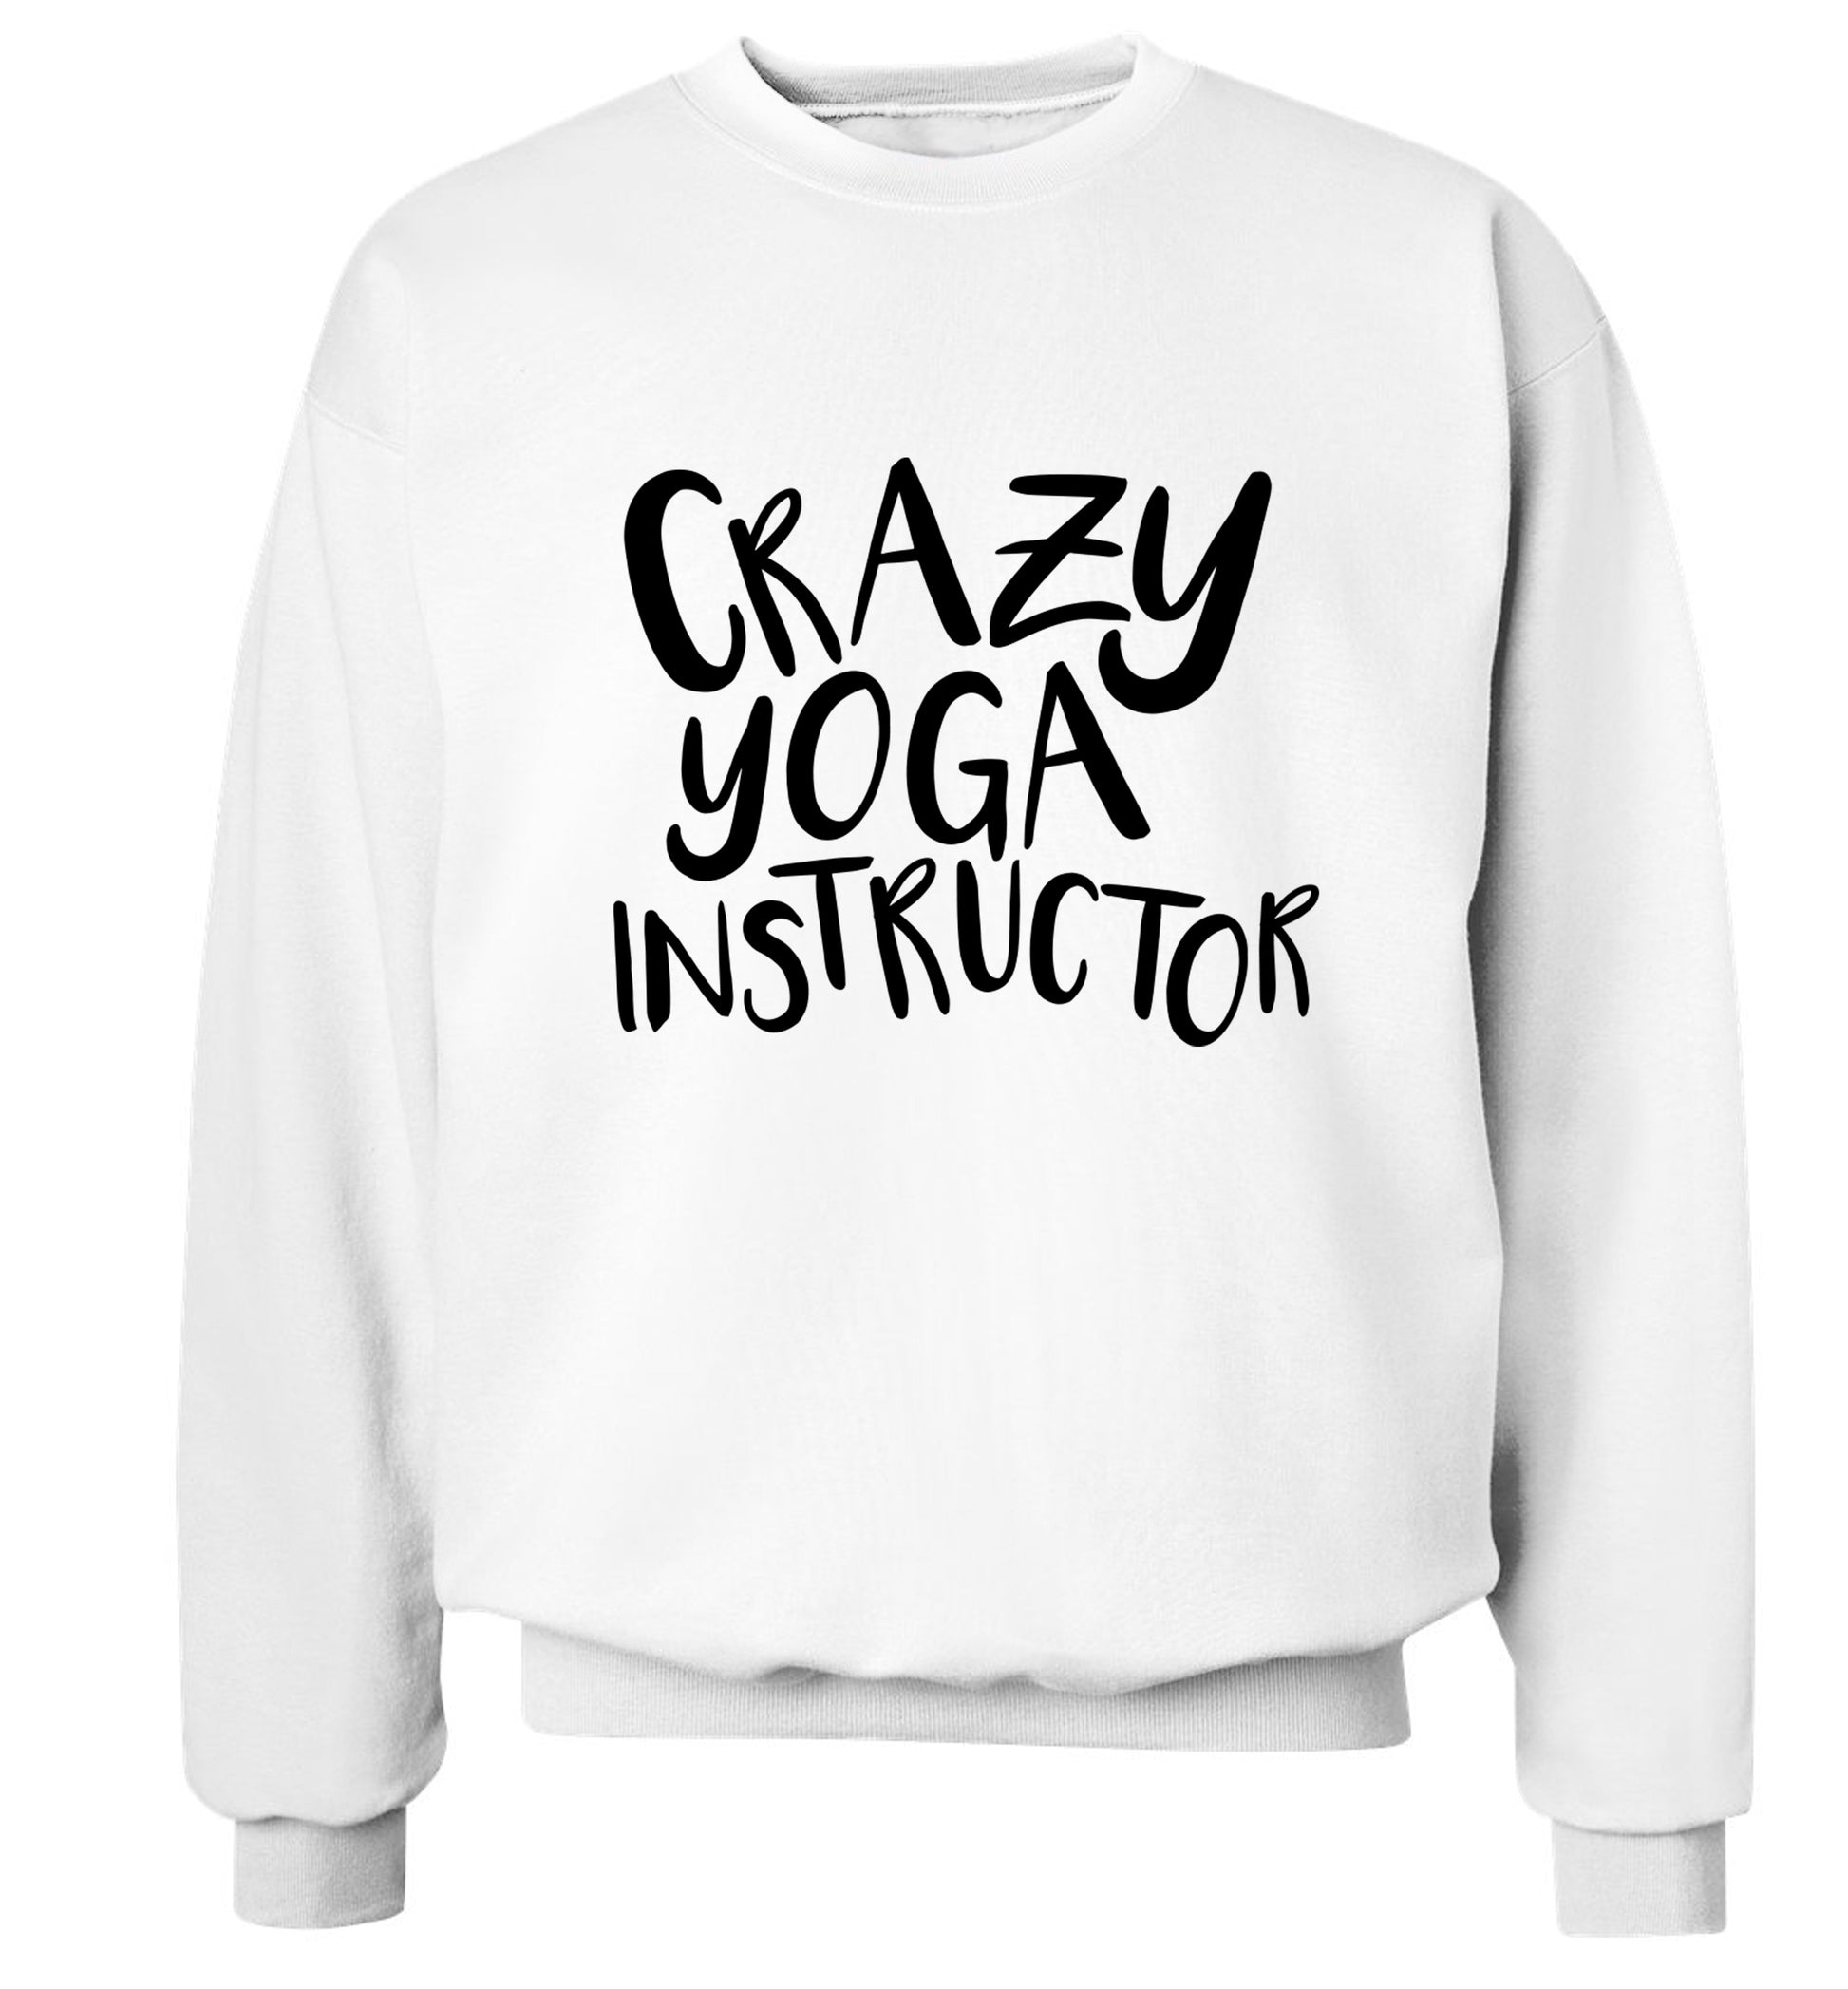 Crazy yoga instructor Adult's unisex white Sweater 2XL